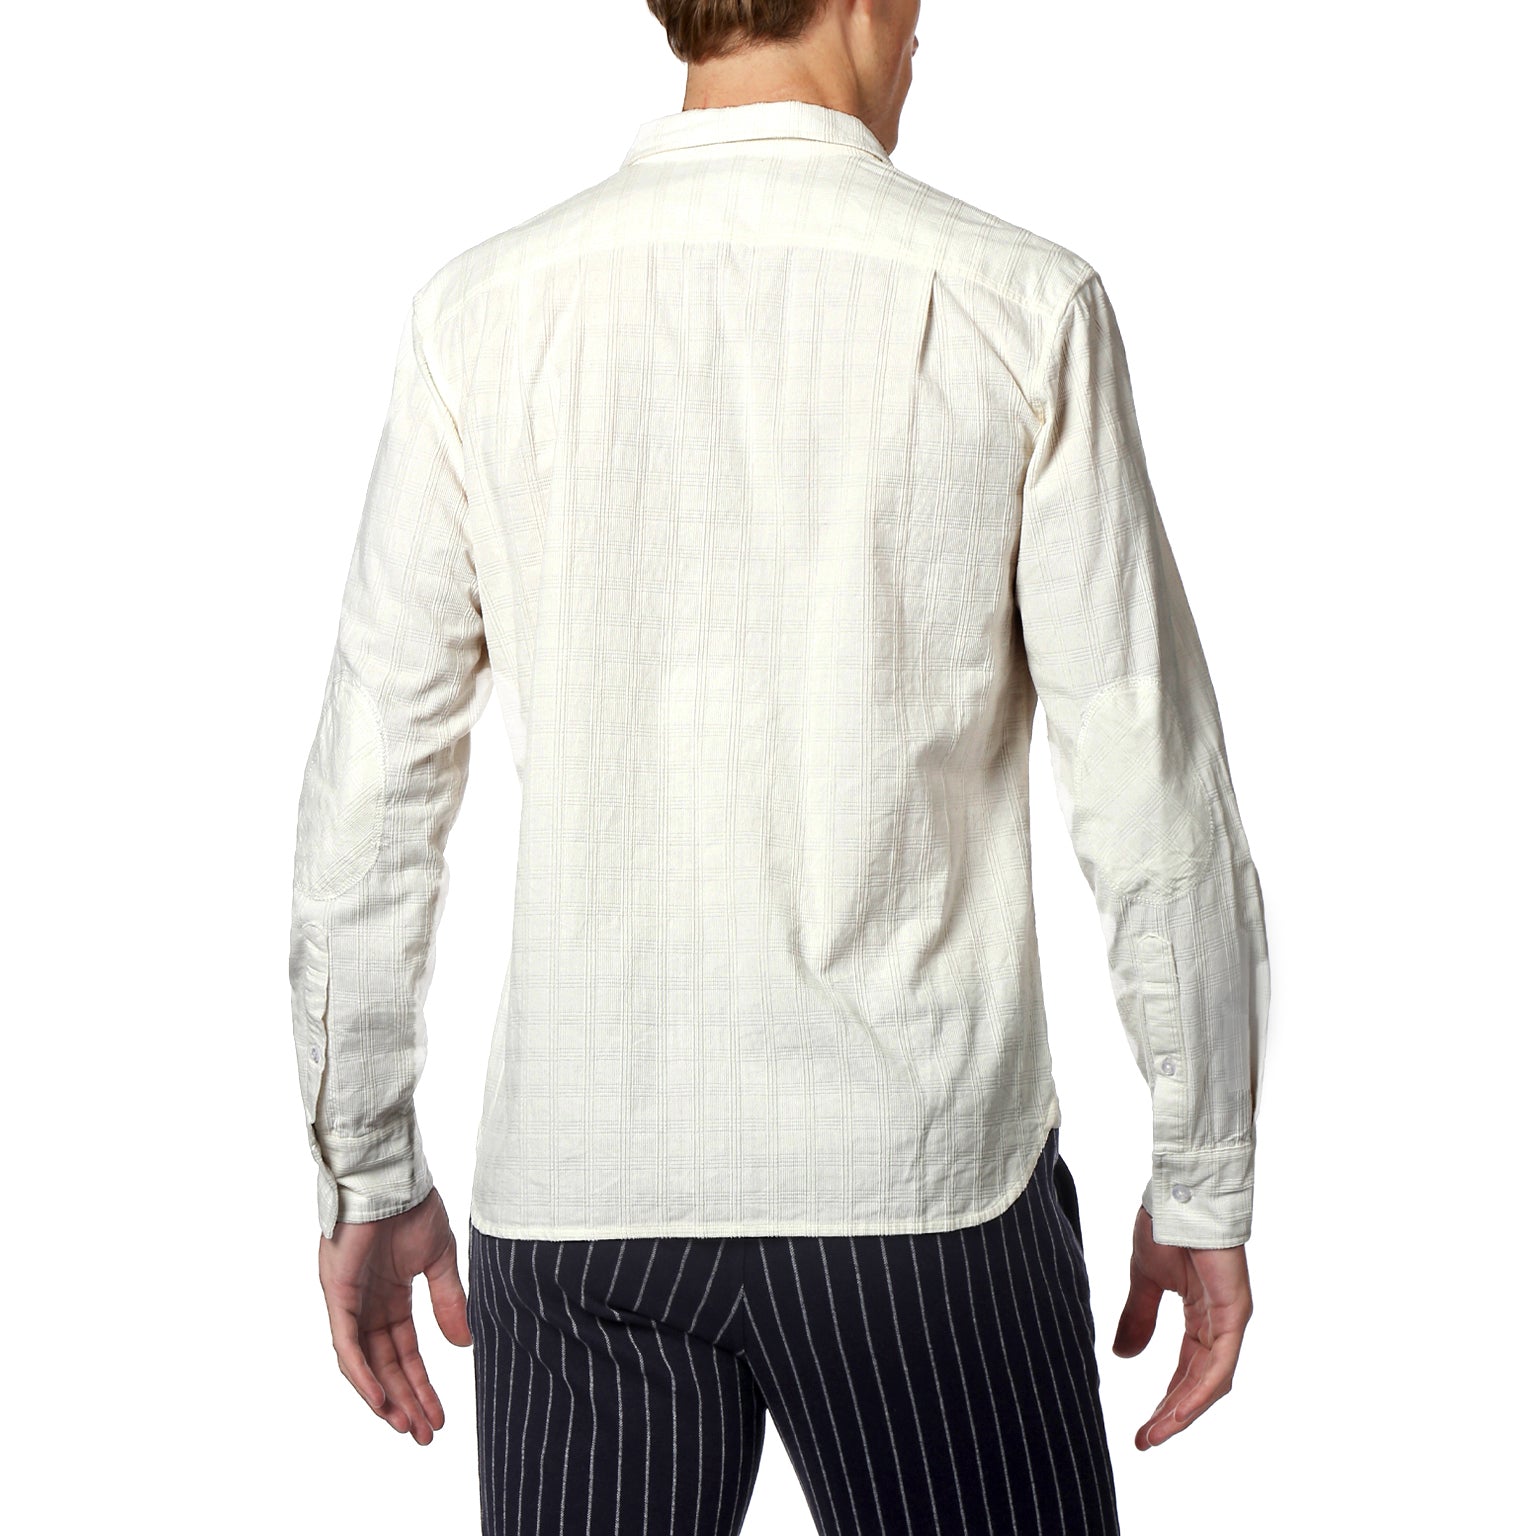 NEW- Winter White Corduroy Check Shirt